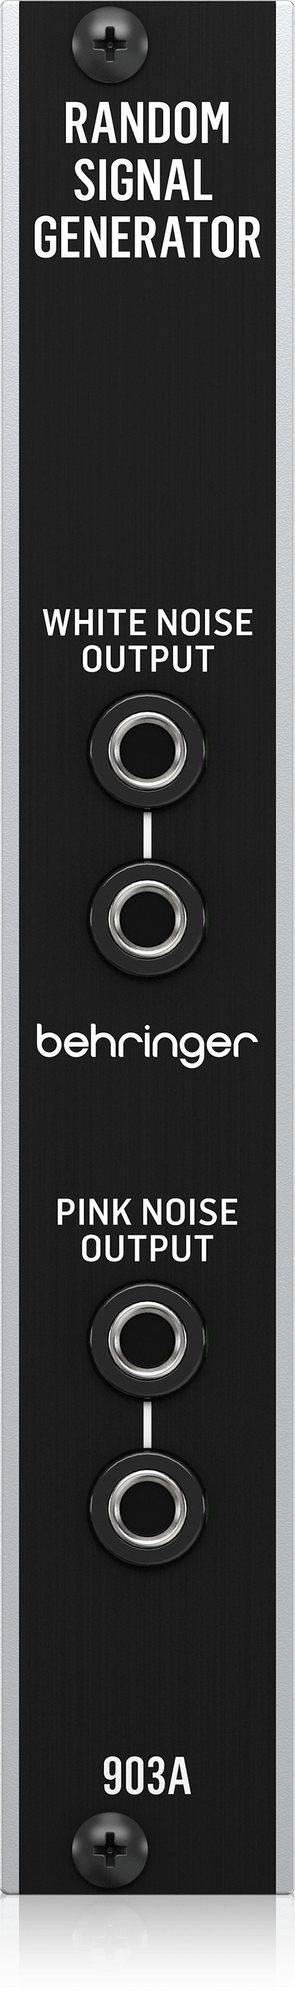 Behringer | Product | 903A RANDOM SIGNAL GENERATOR